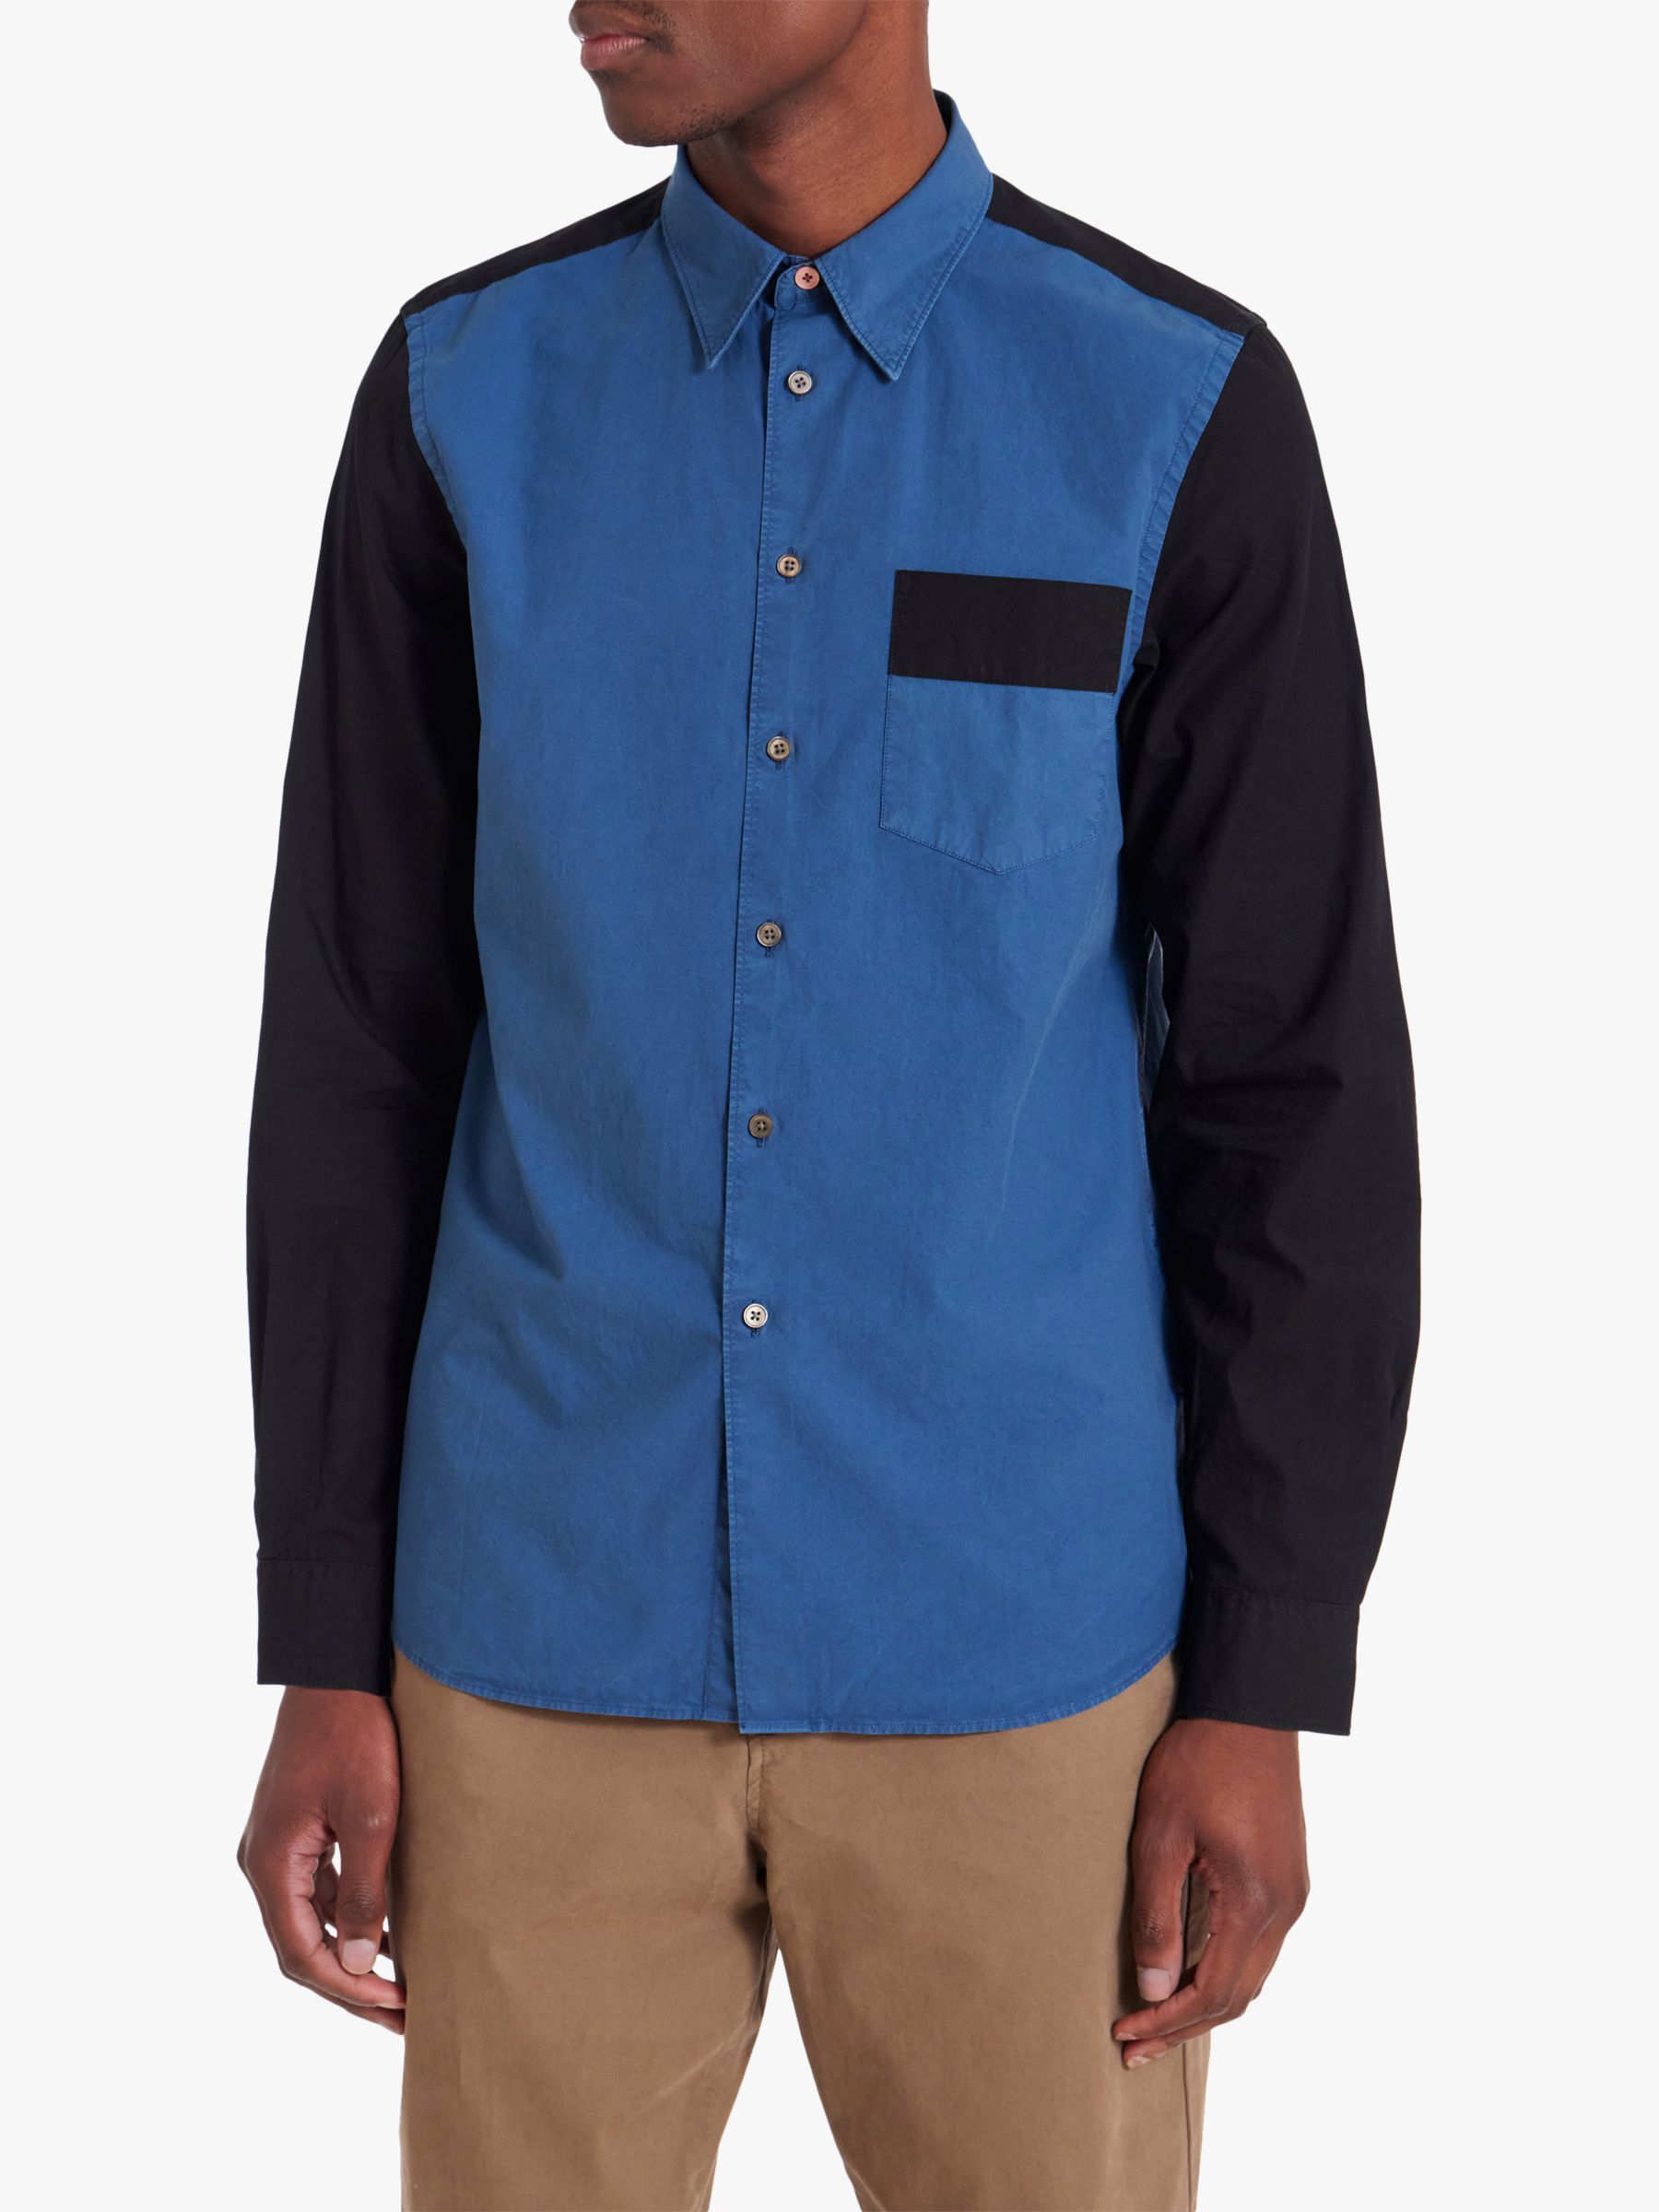 Paul Smith Long Sleeve Regular Shirt, Blue, S